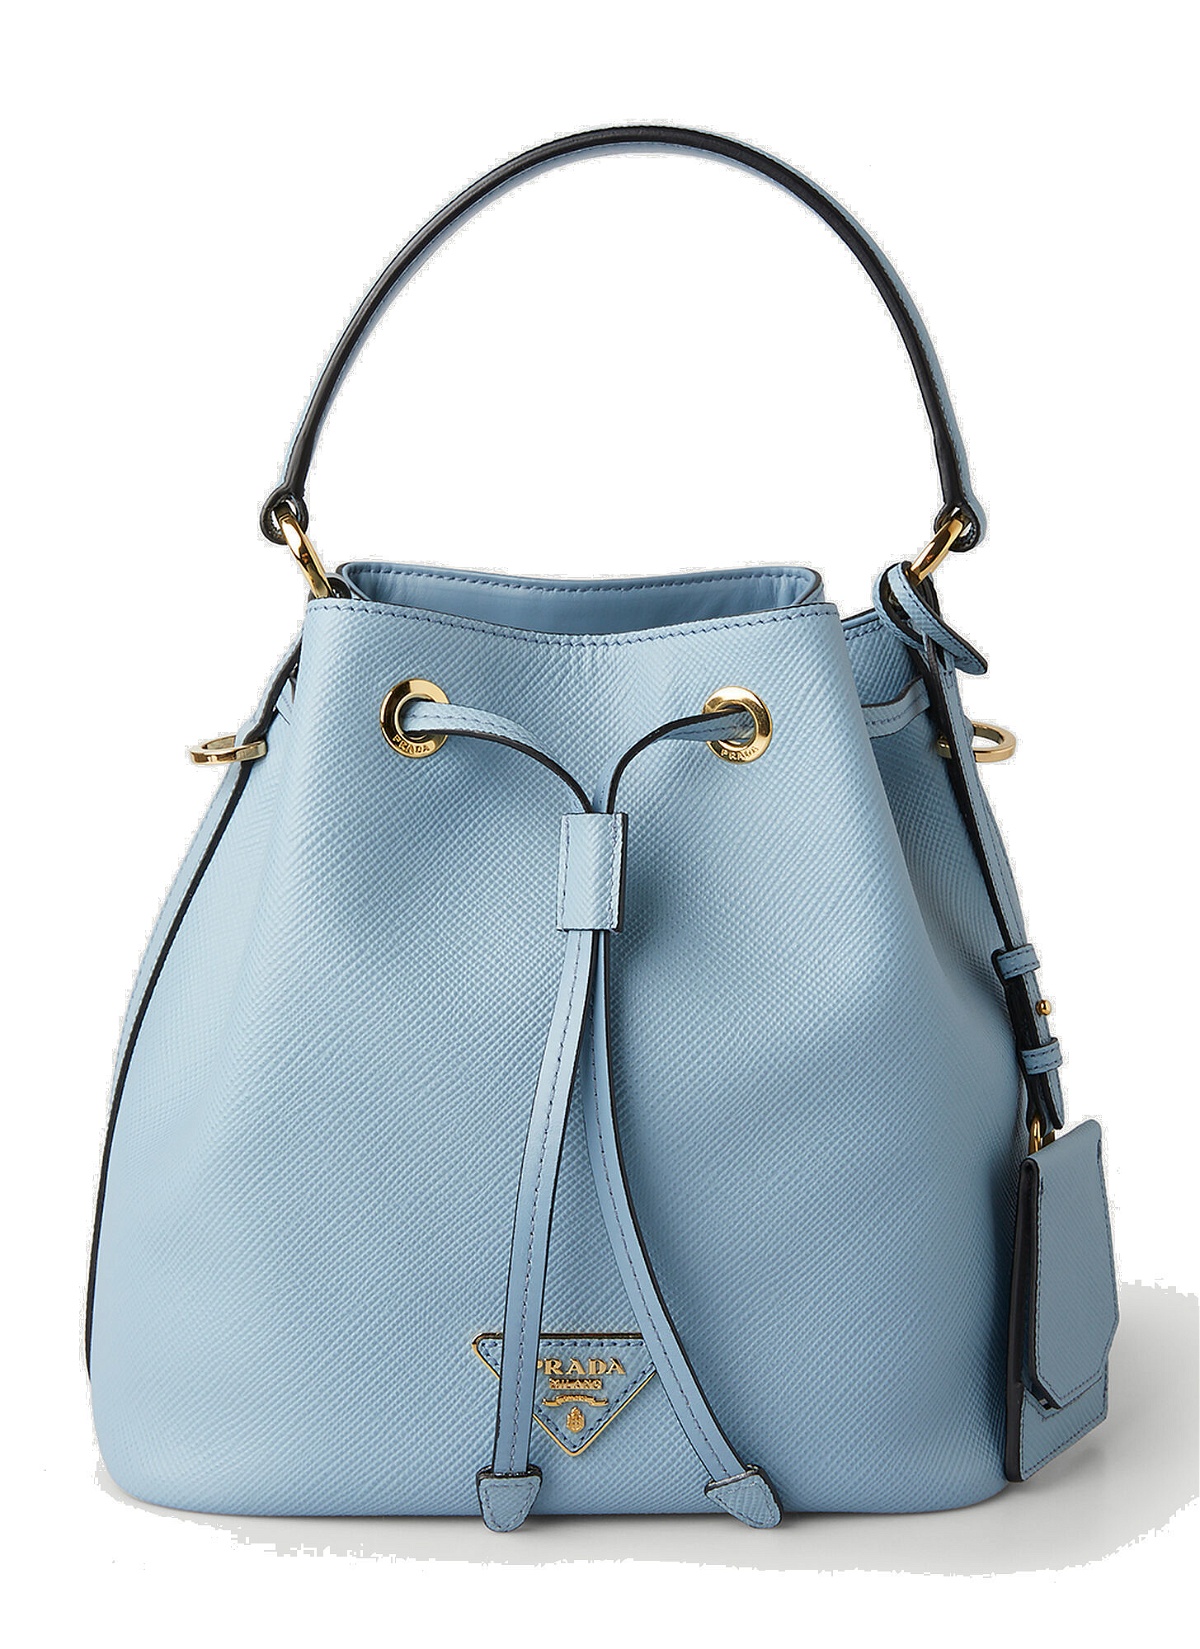 Prada Saffiano Leather Bucket Bag in Blue